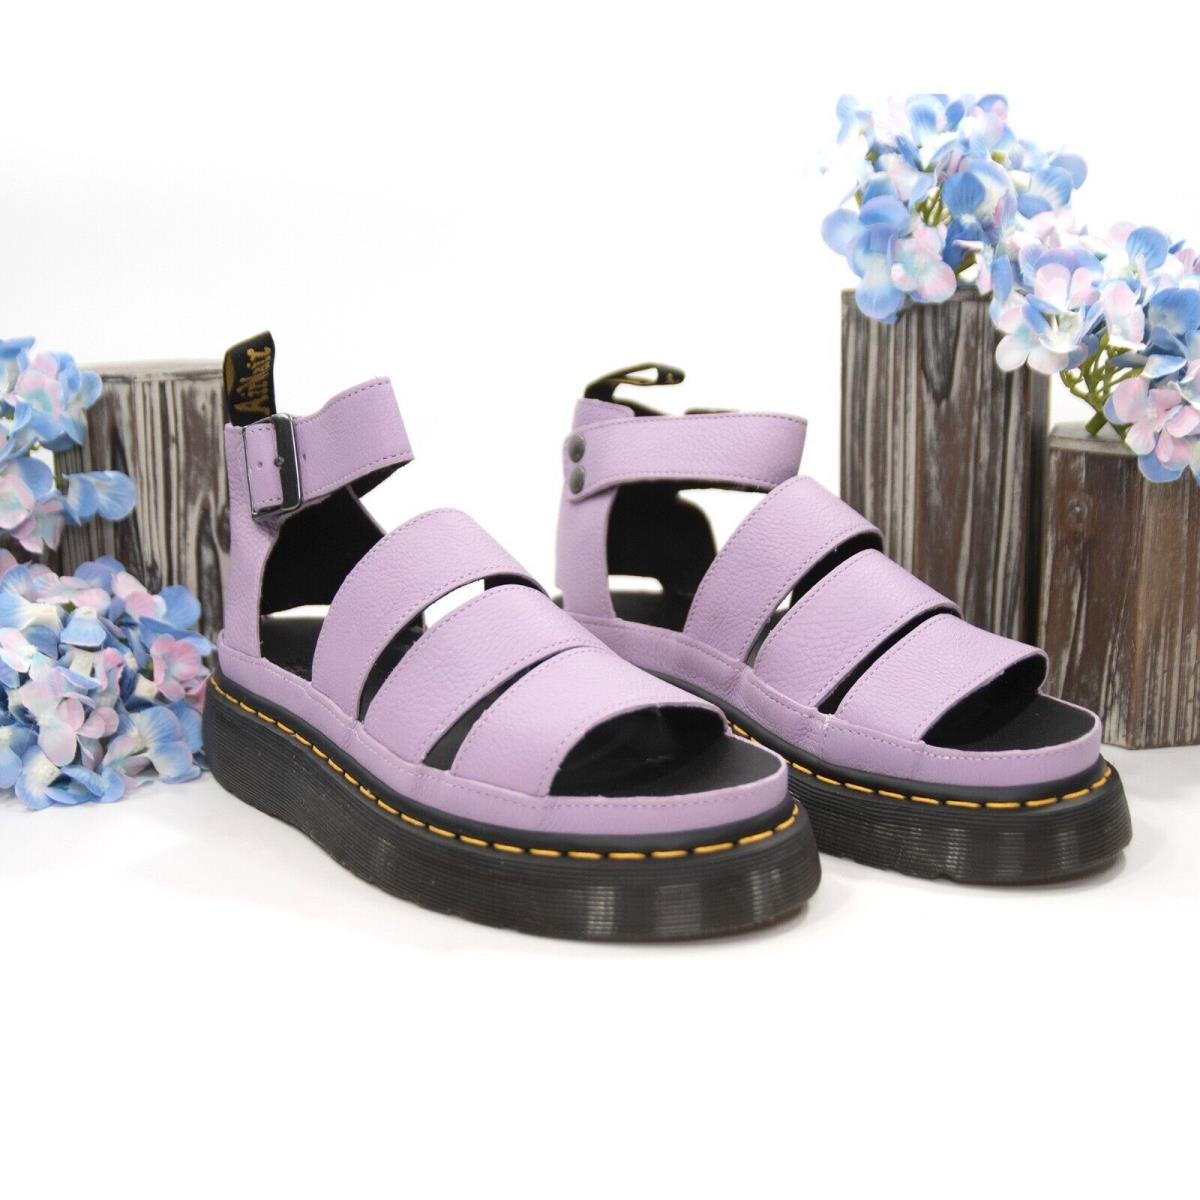 Dr. Martens Lilac Leather Clarissa 2 Quad Gladiator Sandal Shoes Size 9